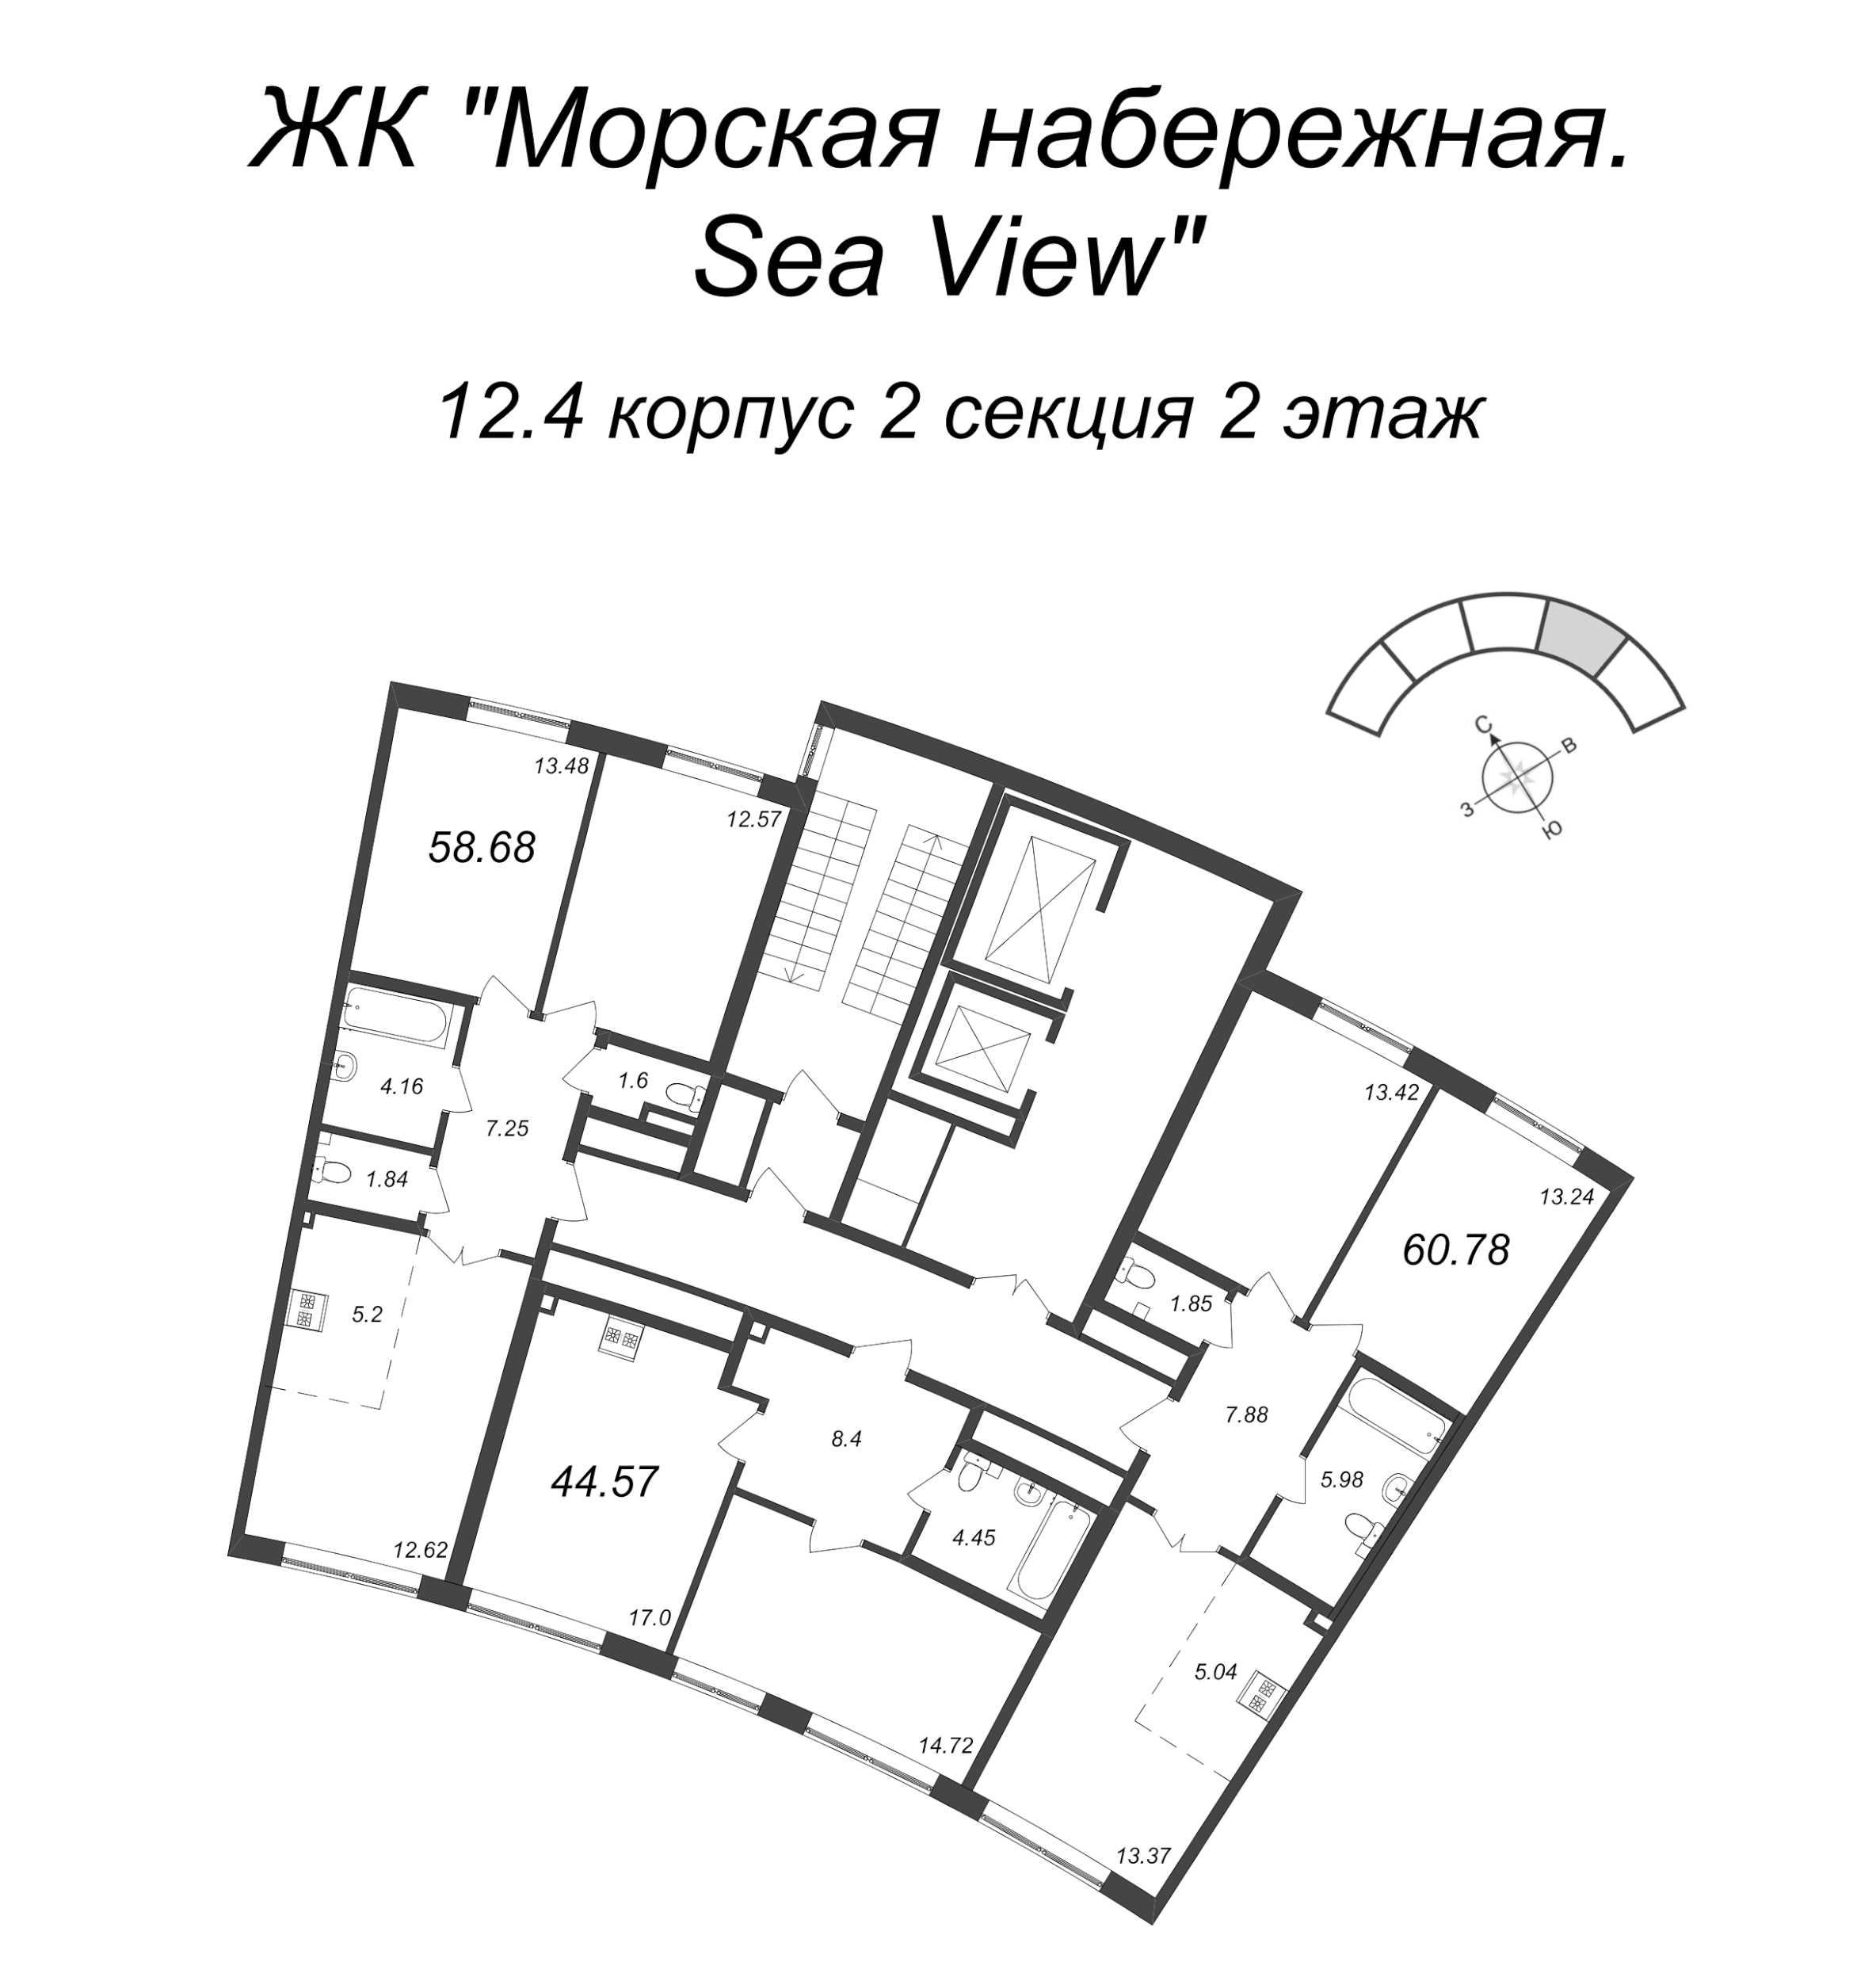 3-комнатная (Евро) квартира, 58.68 м² - планировка этажа